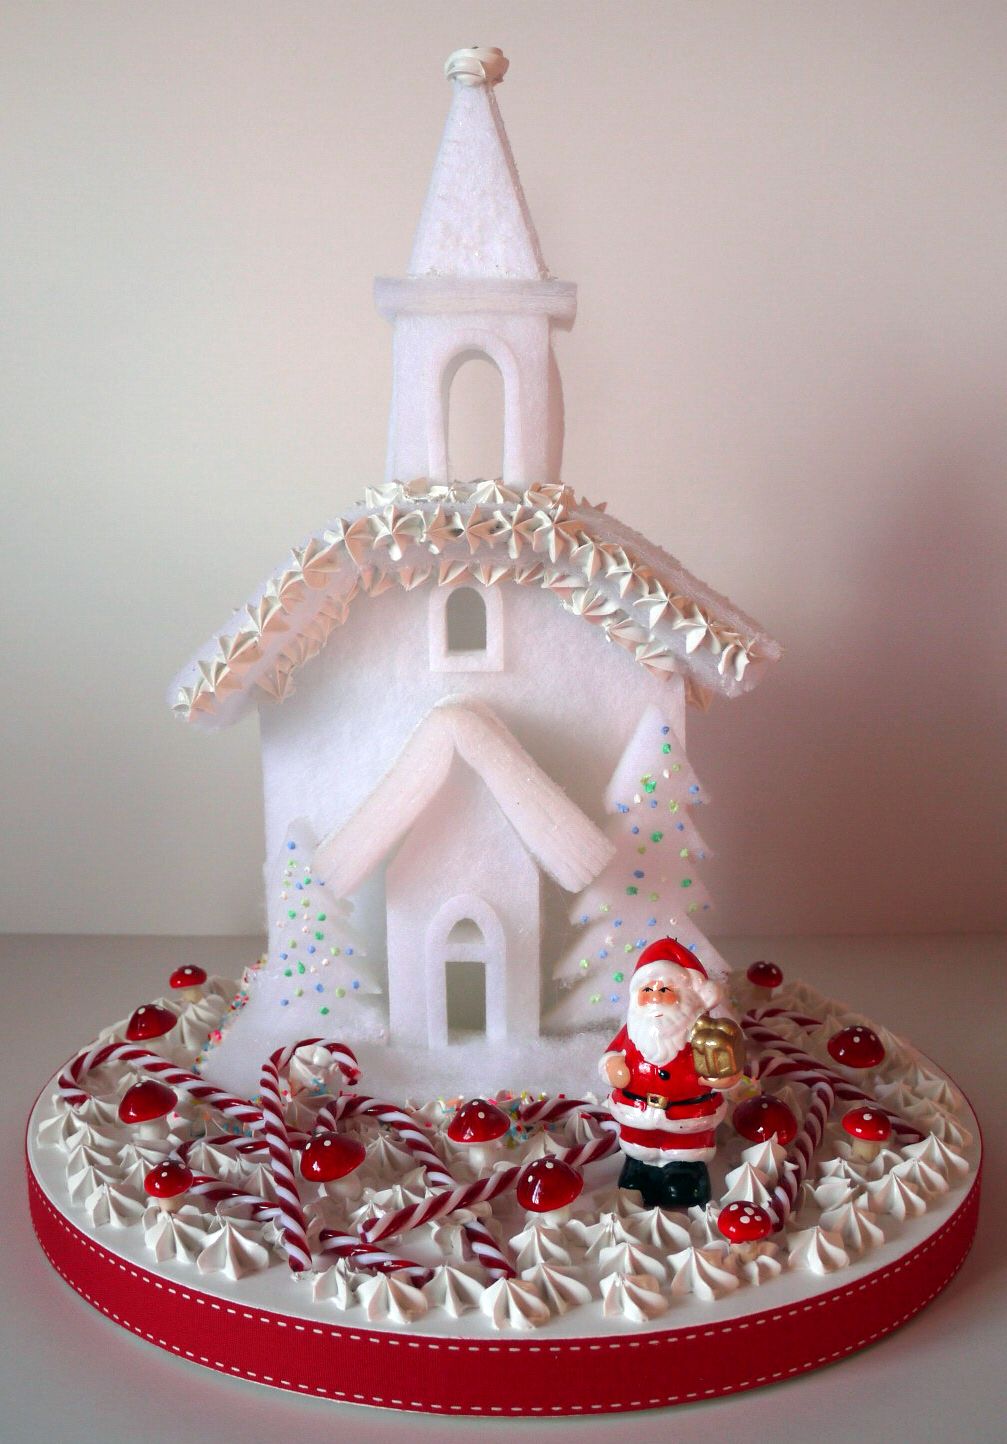 Christmas decorative cake - torta finta natalizia